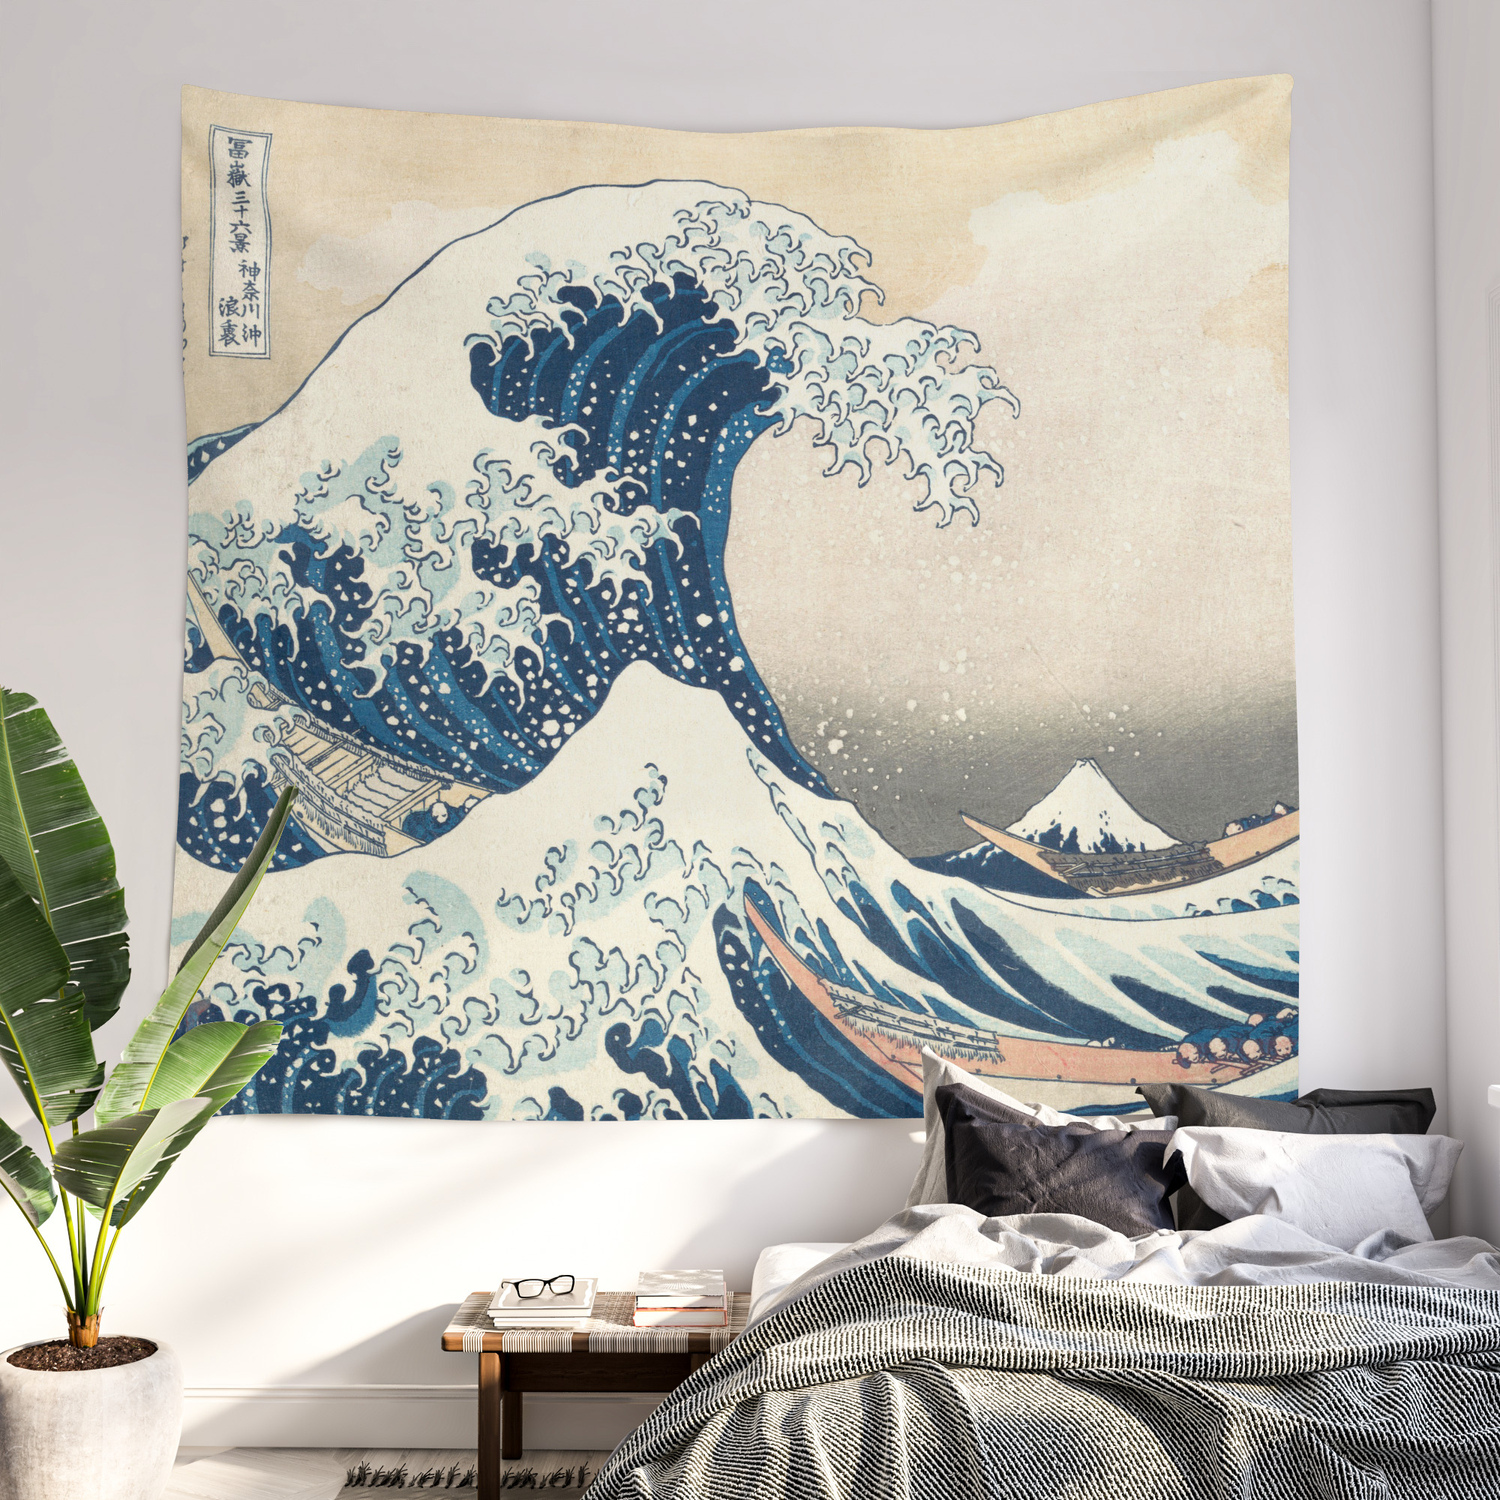 The Great Wave Off Kanagawa By Katsushika Hokusai From The Series Thirty Six Views Of Mount Fuji Wall Tapestry By Public Artography Society6